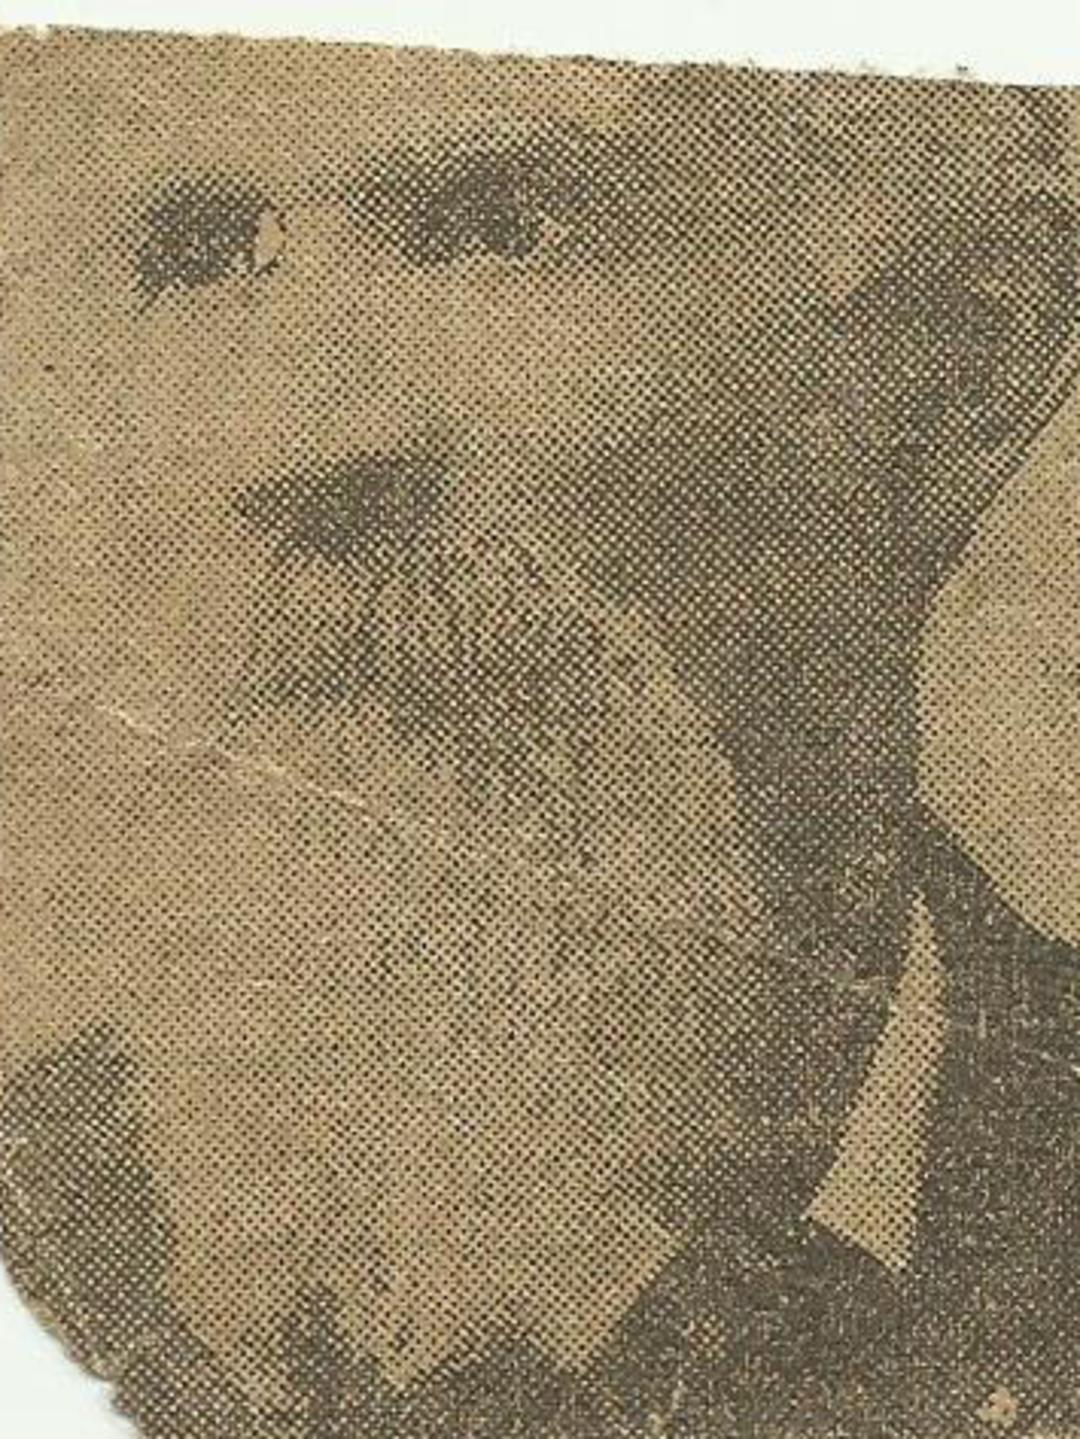 Rufus Bronson Ensign (1832 - 1915) Profile